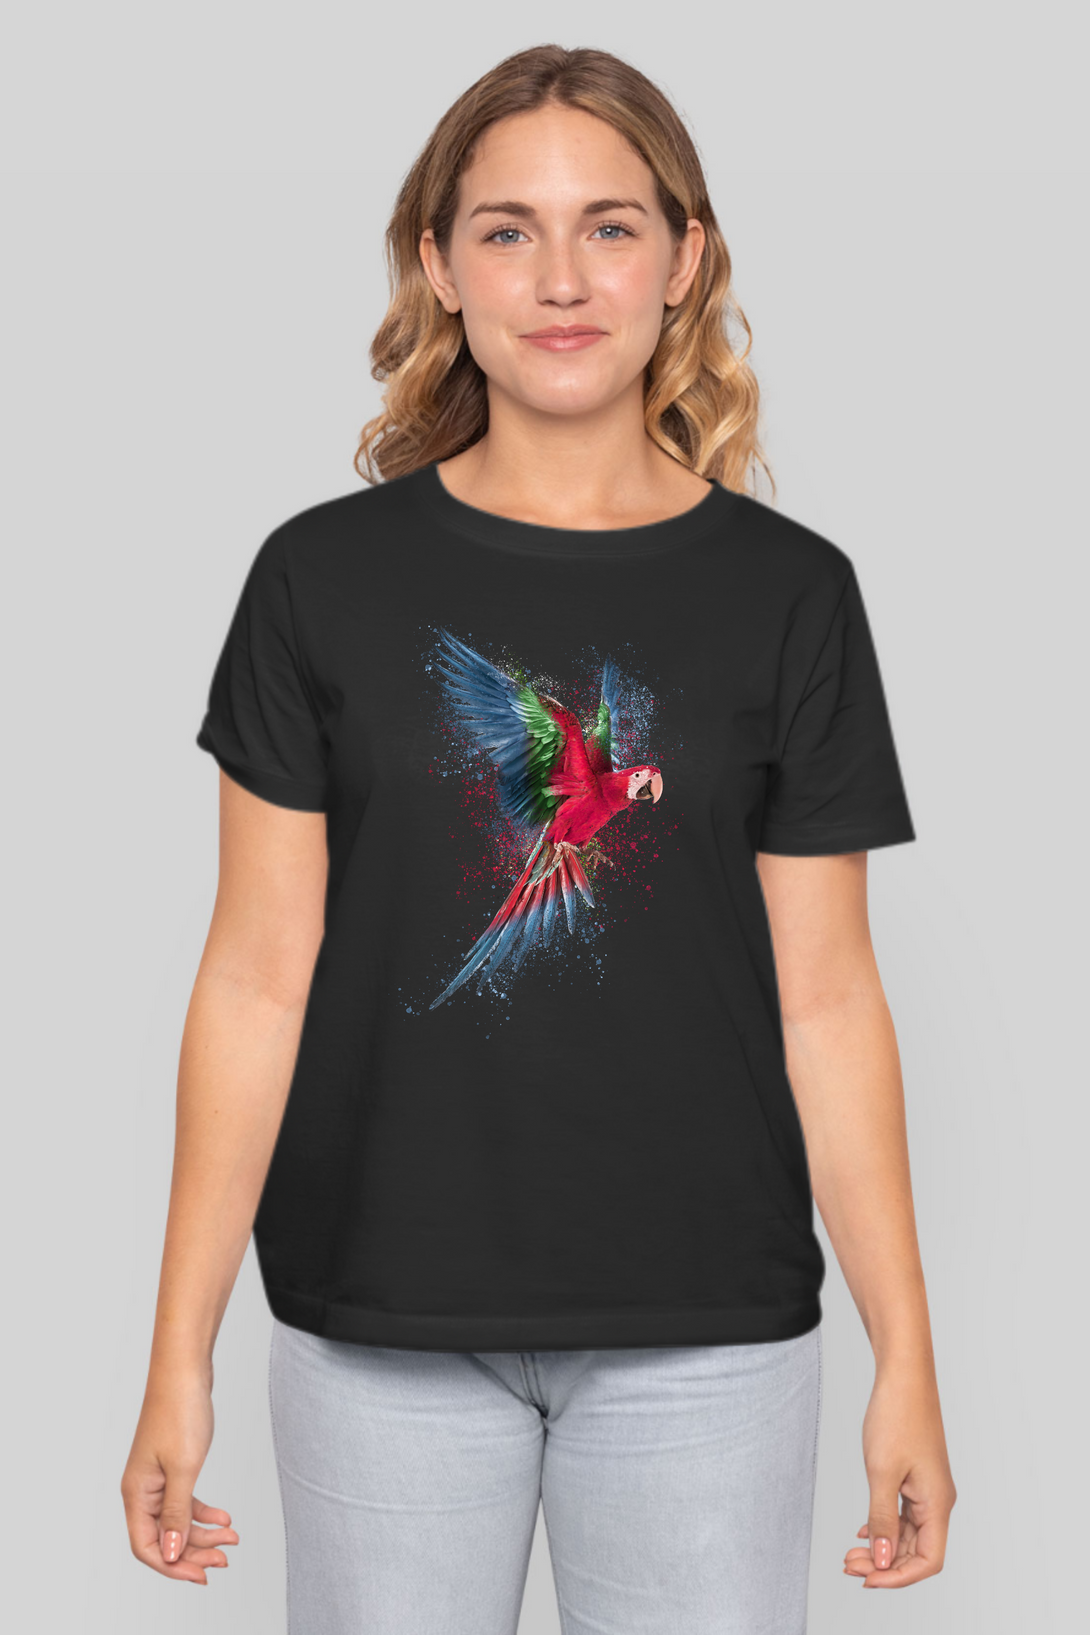 Vibrant Parrot Printed T-Shirt For Women - WowWaves - 9